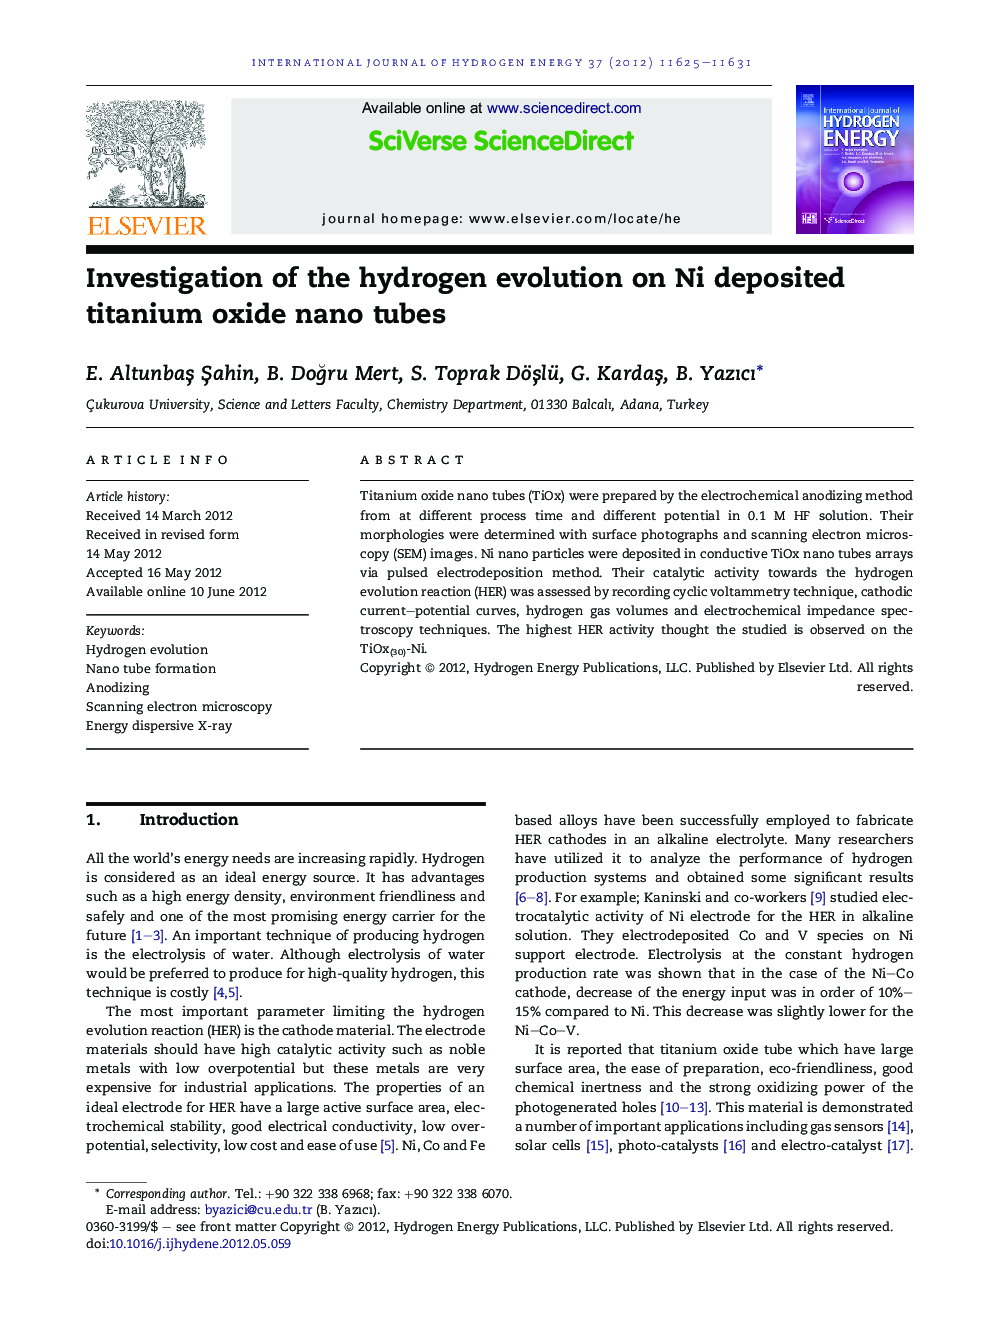 Investigation of the hydrogen evolution on Ni deposited titanium oxide nano tubes